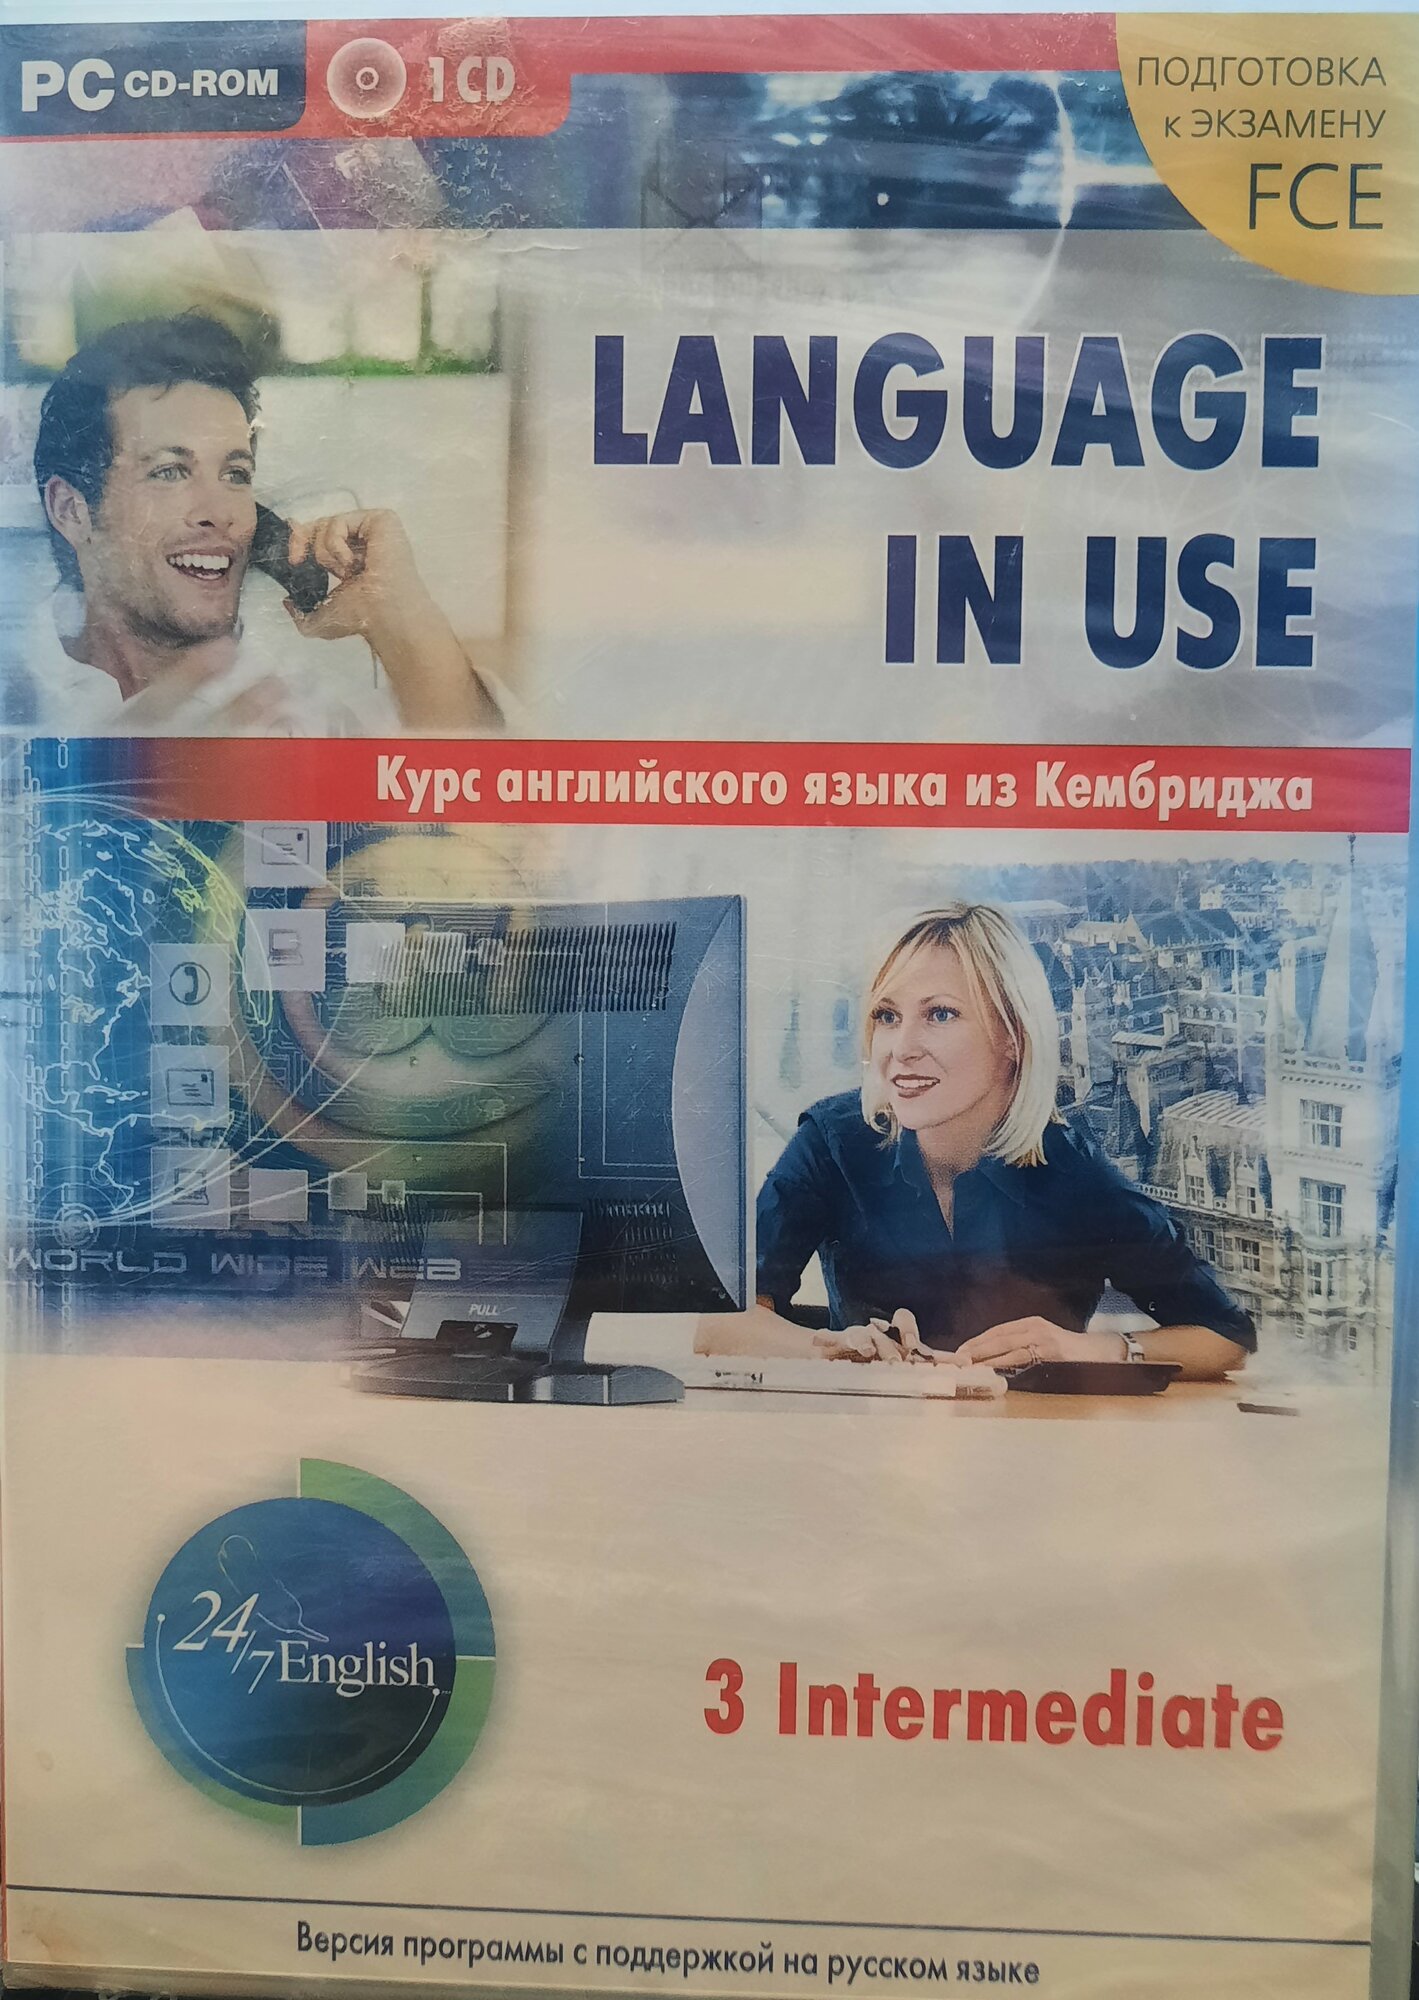 CD Language in Use 3 c поддержкой на русском языке PC-CD (DVD-box)